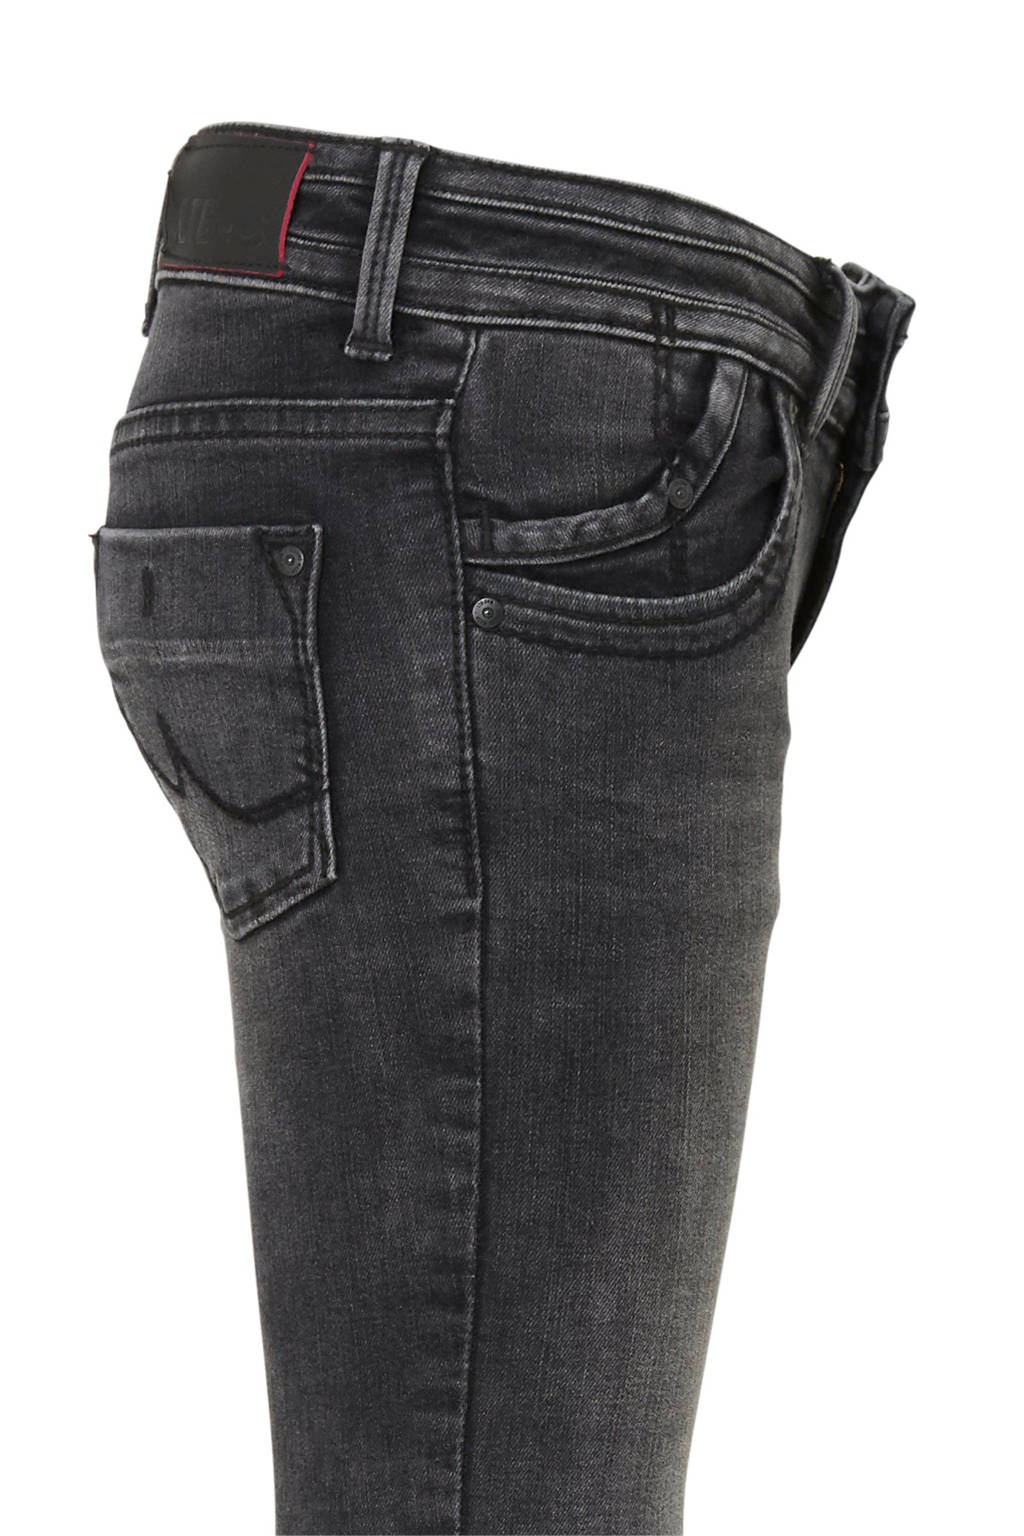 knal Mount Bank slinger LTB skinny jeans Julita black vivid wash | wehkamp